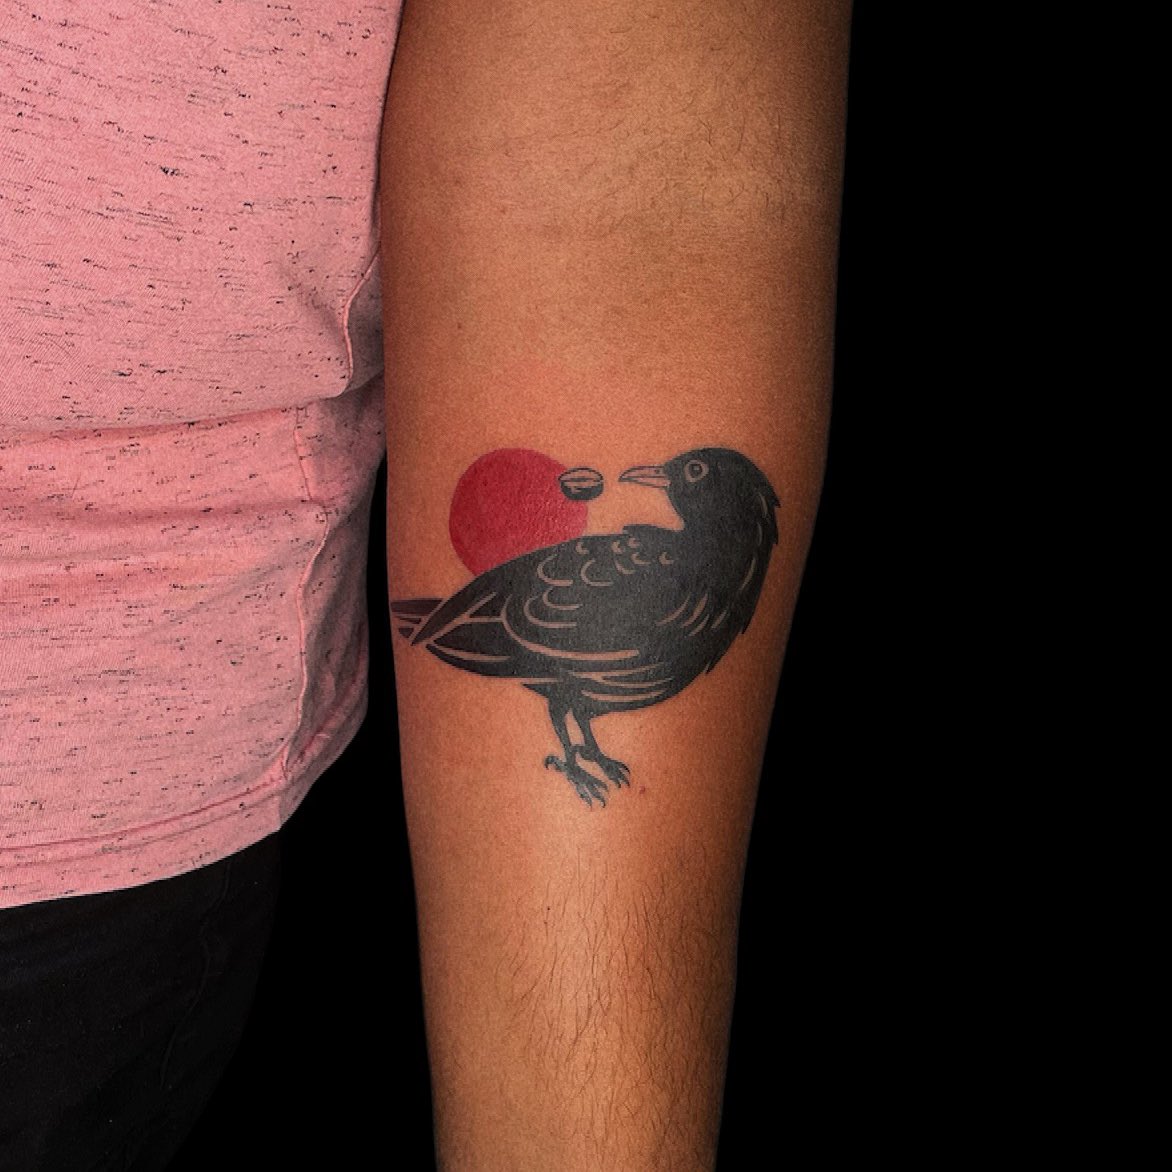 Crow from death cab for cutie album cover transatlanticism tattoo idea |  TattoosAI